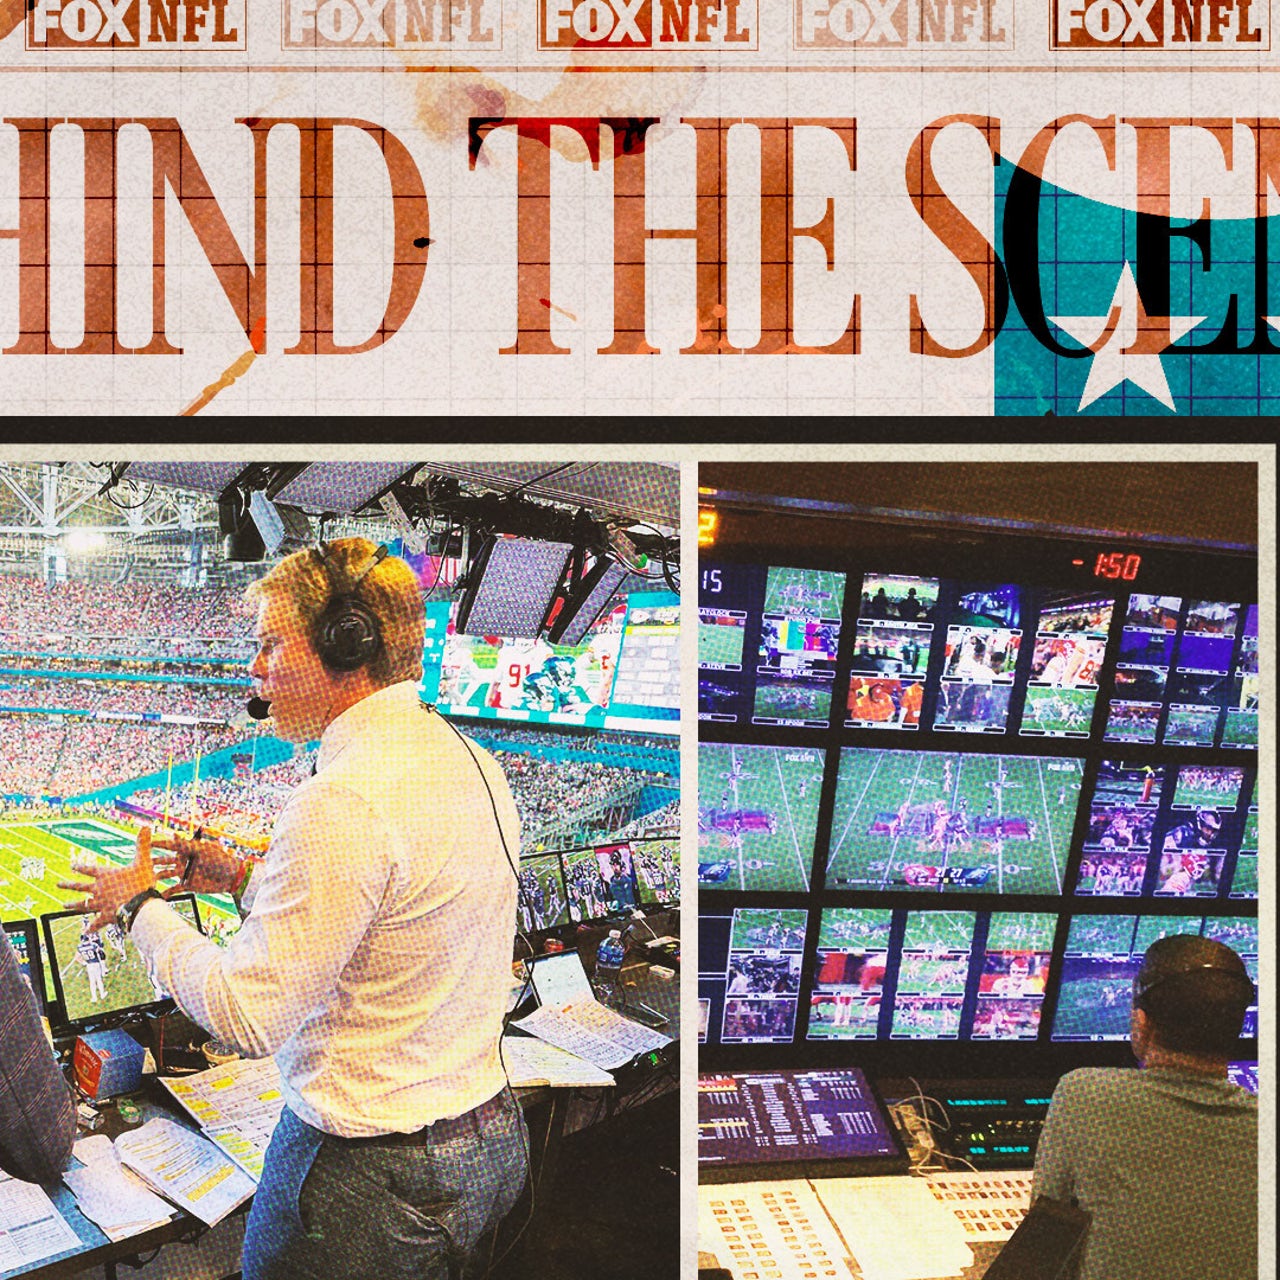 FOX Sports kicks off the NFL season with a groundbreaking multicam